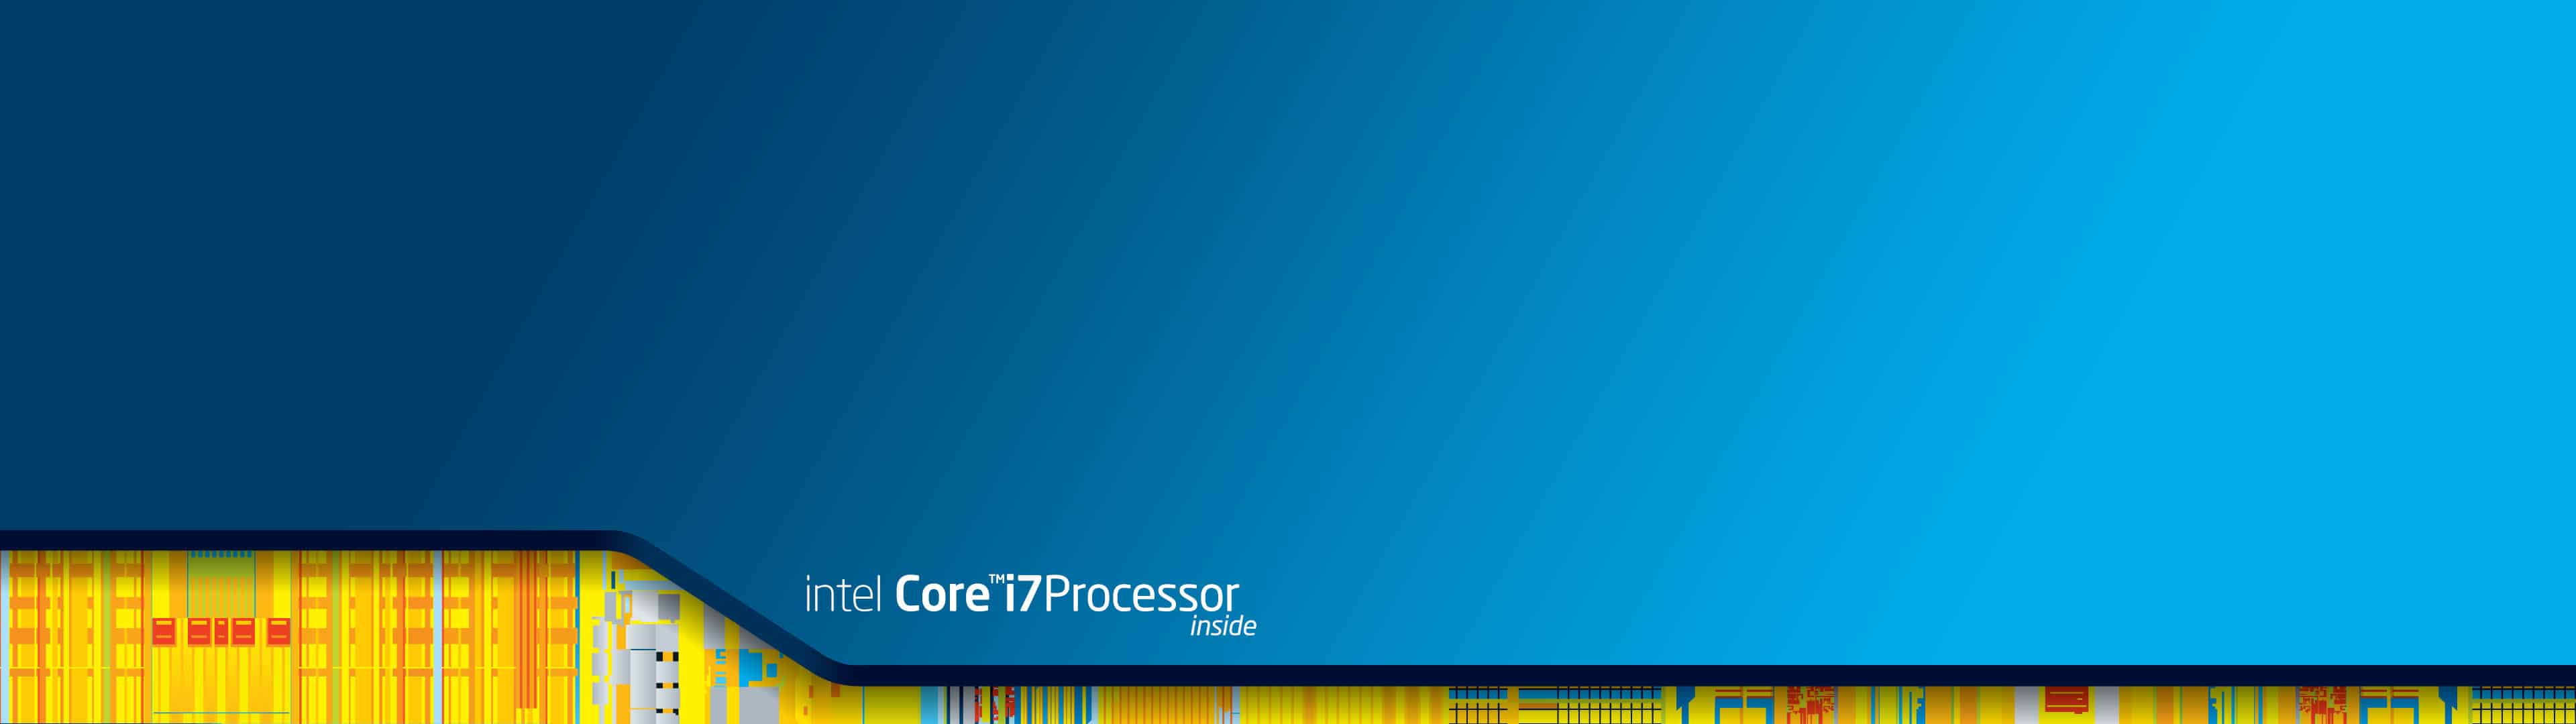 Intel Core i7 Processor Inside Dual Monitor Wallpaper